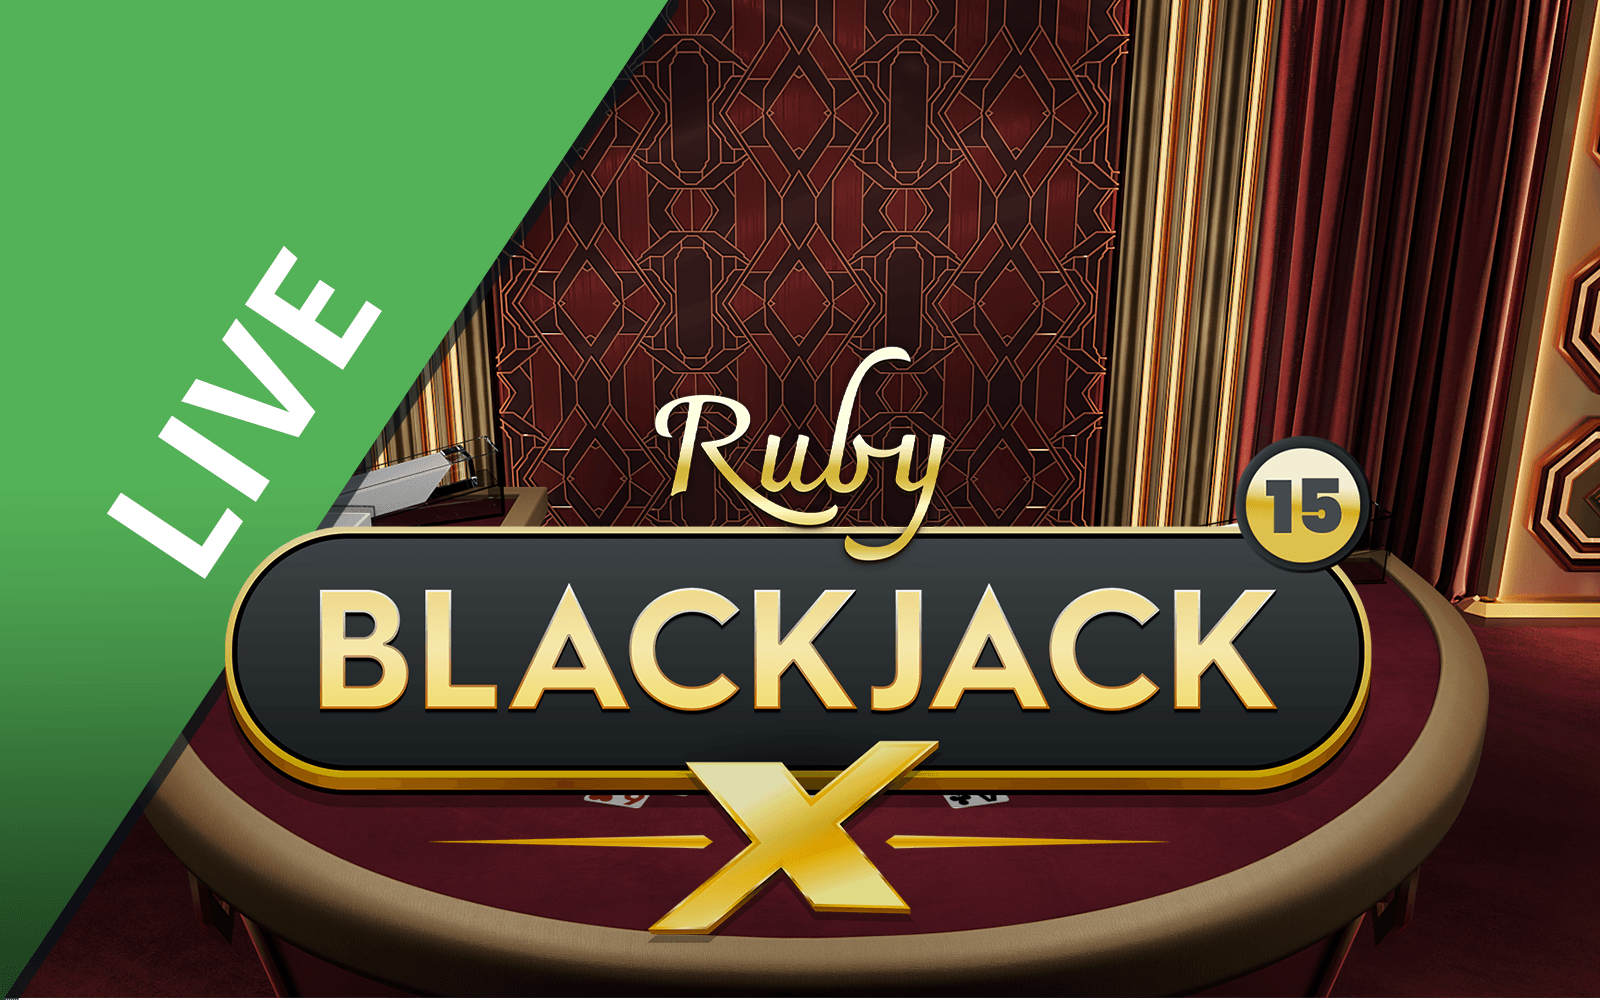 Play BlackjackX 15 - Ruby on Starcasino.be online casino